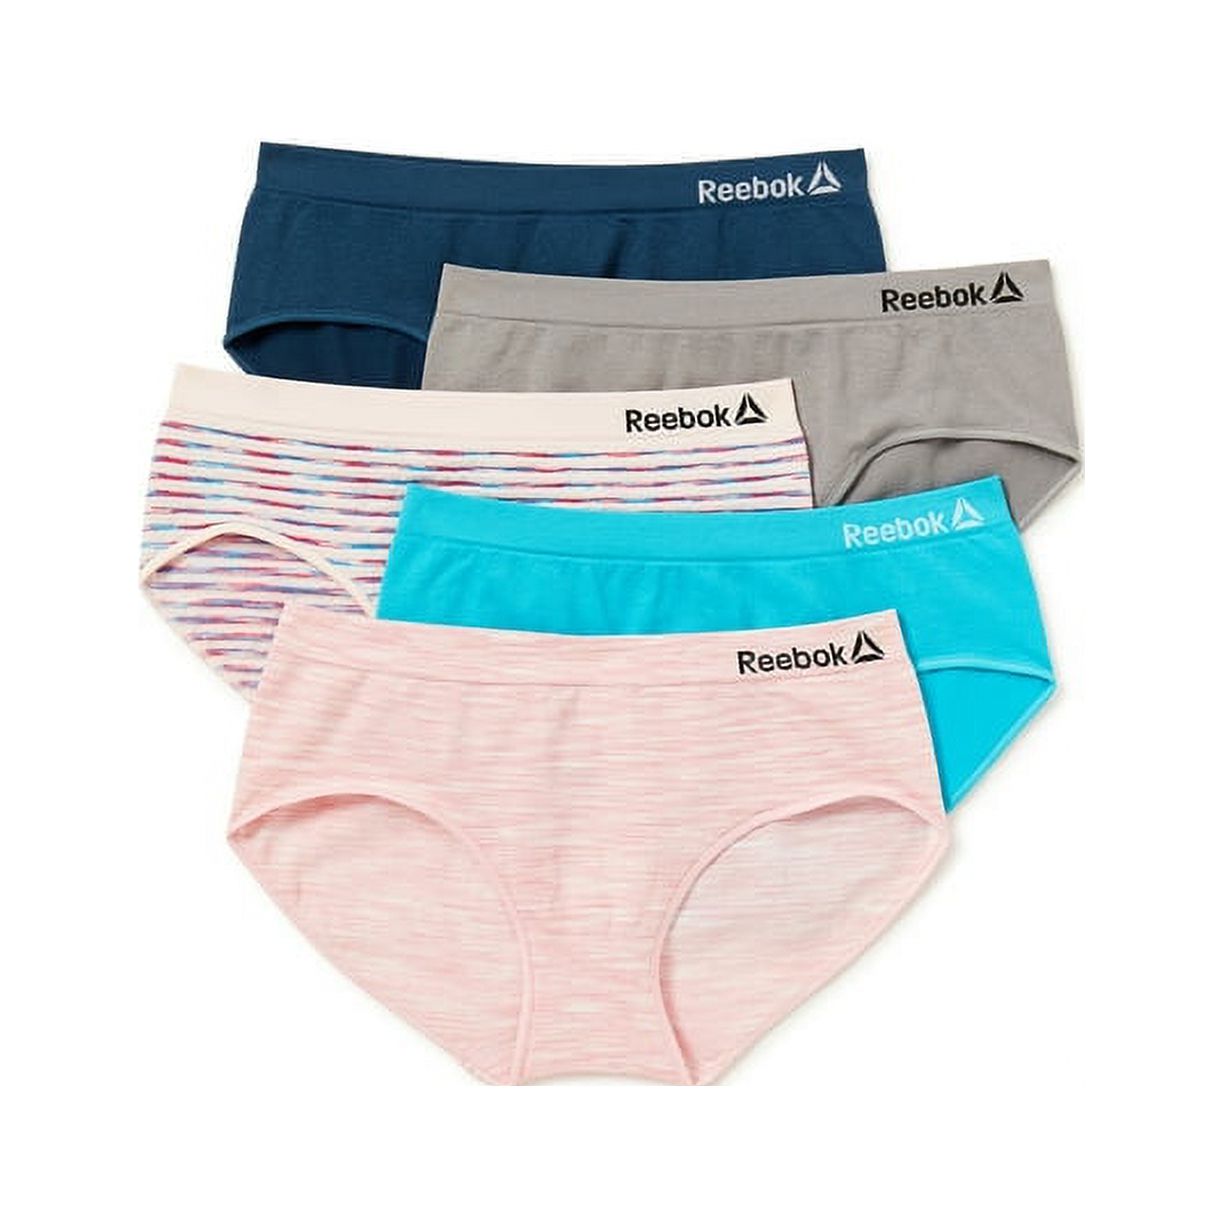 Reebok Girl's Underwear, 5 Pack Seamless Hipsters Panties, Sizes S-XL - image 1 of 6